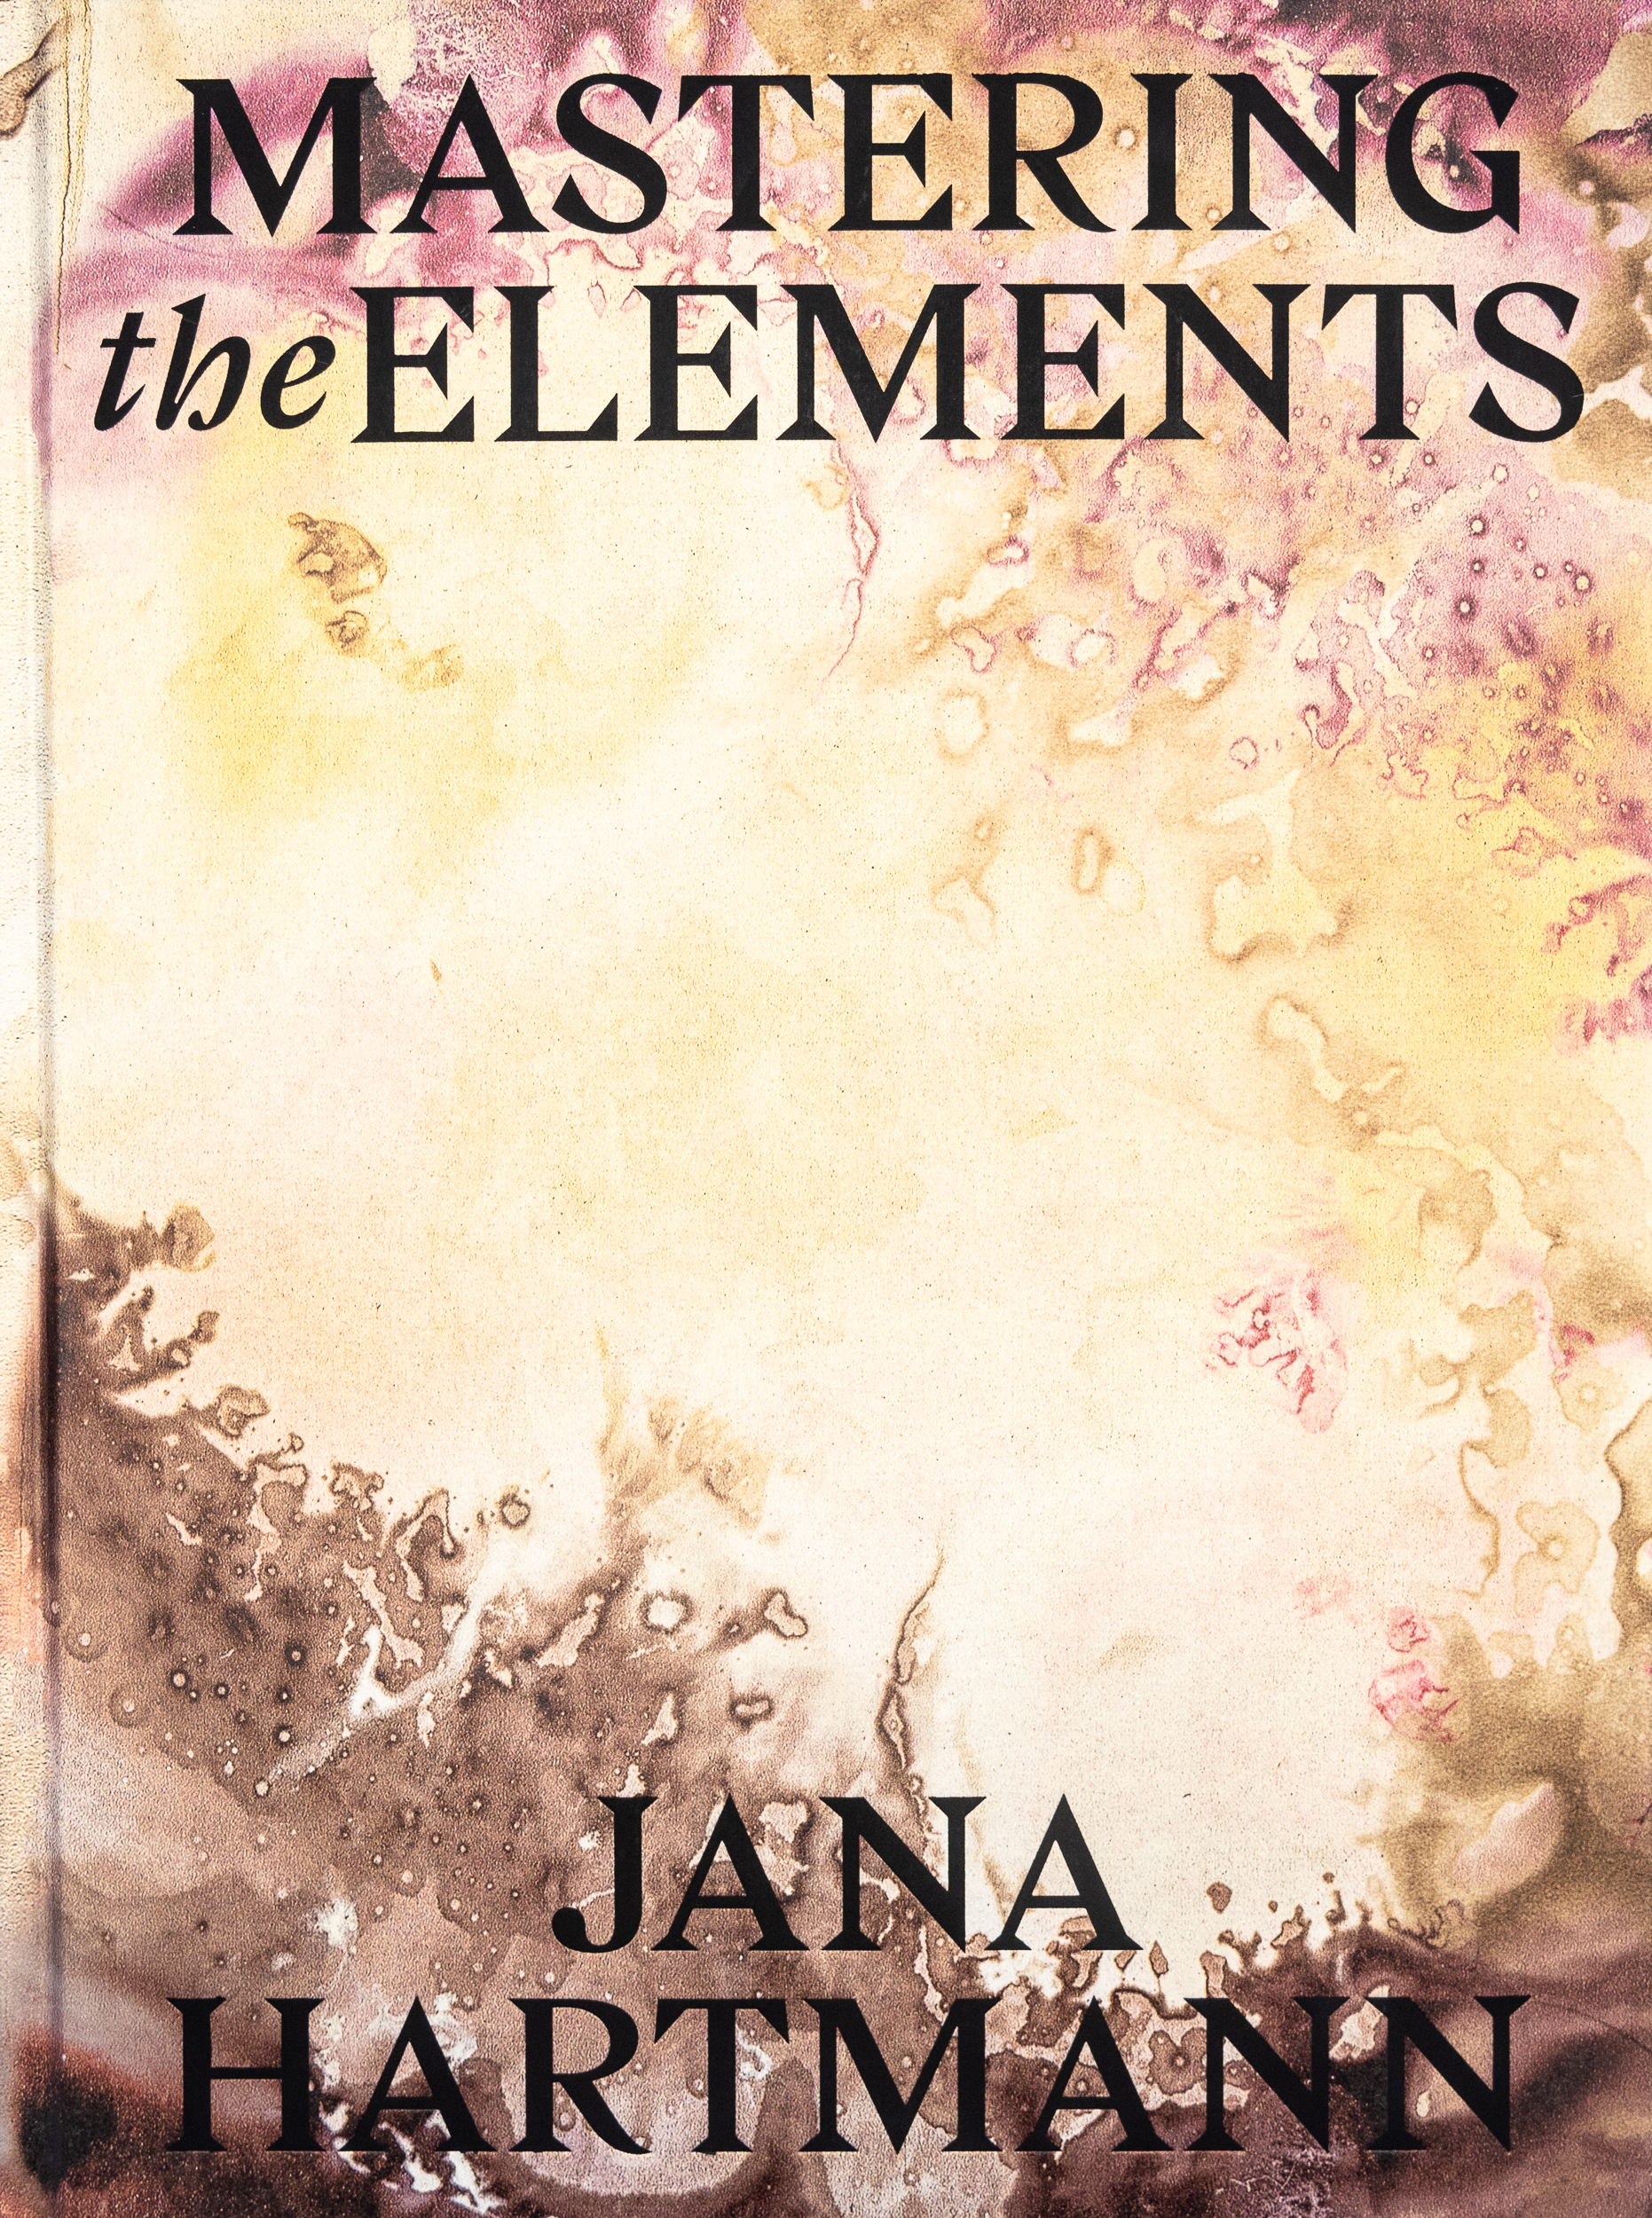 Mastering the Elements, Jana Hartmann